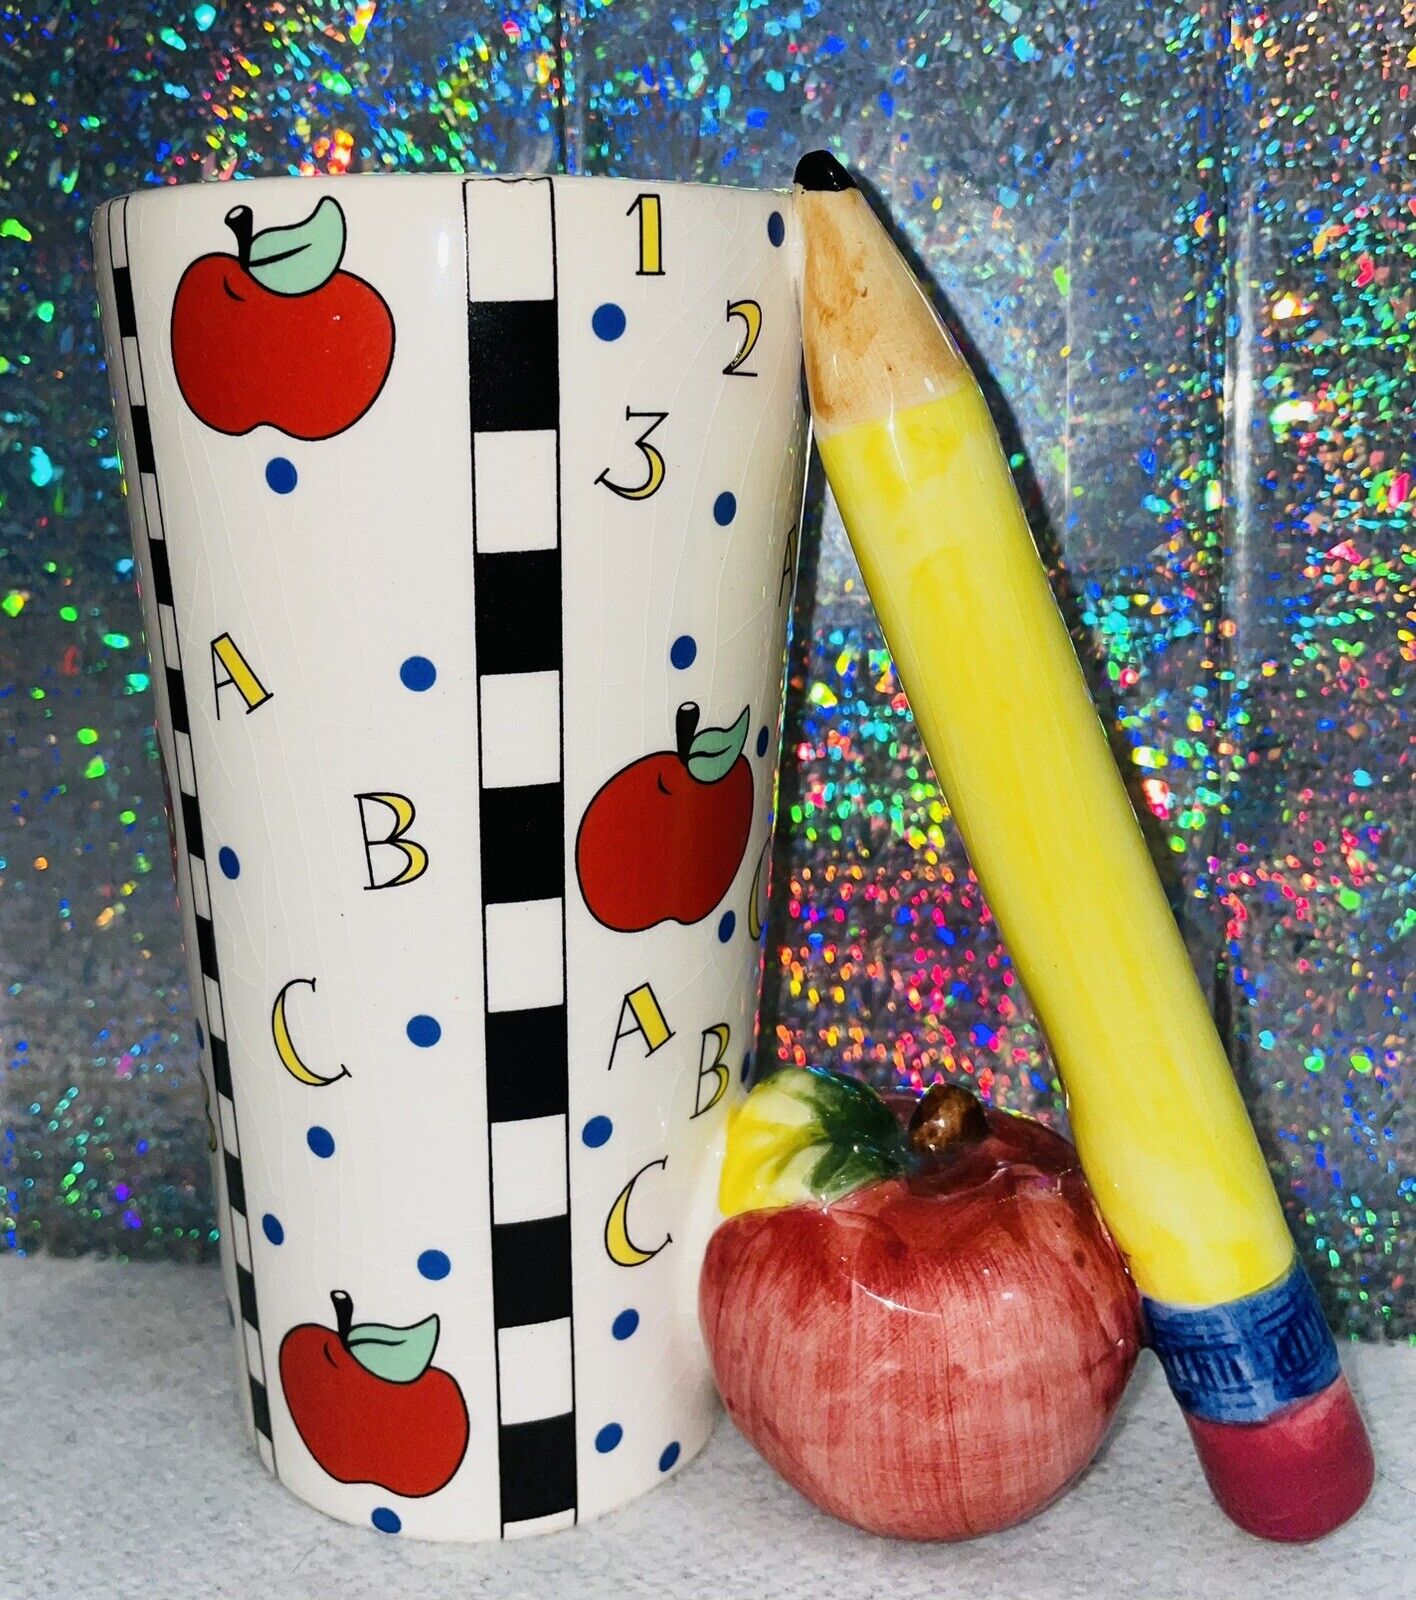 ABC 123 School Teacher Mug Pencil Handle by Smith Enterprises Tall Cup